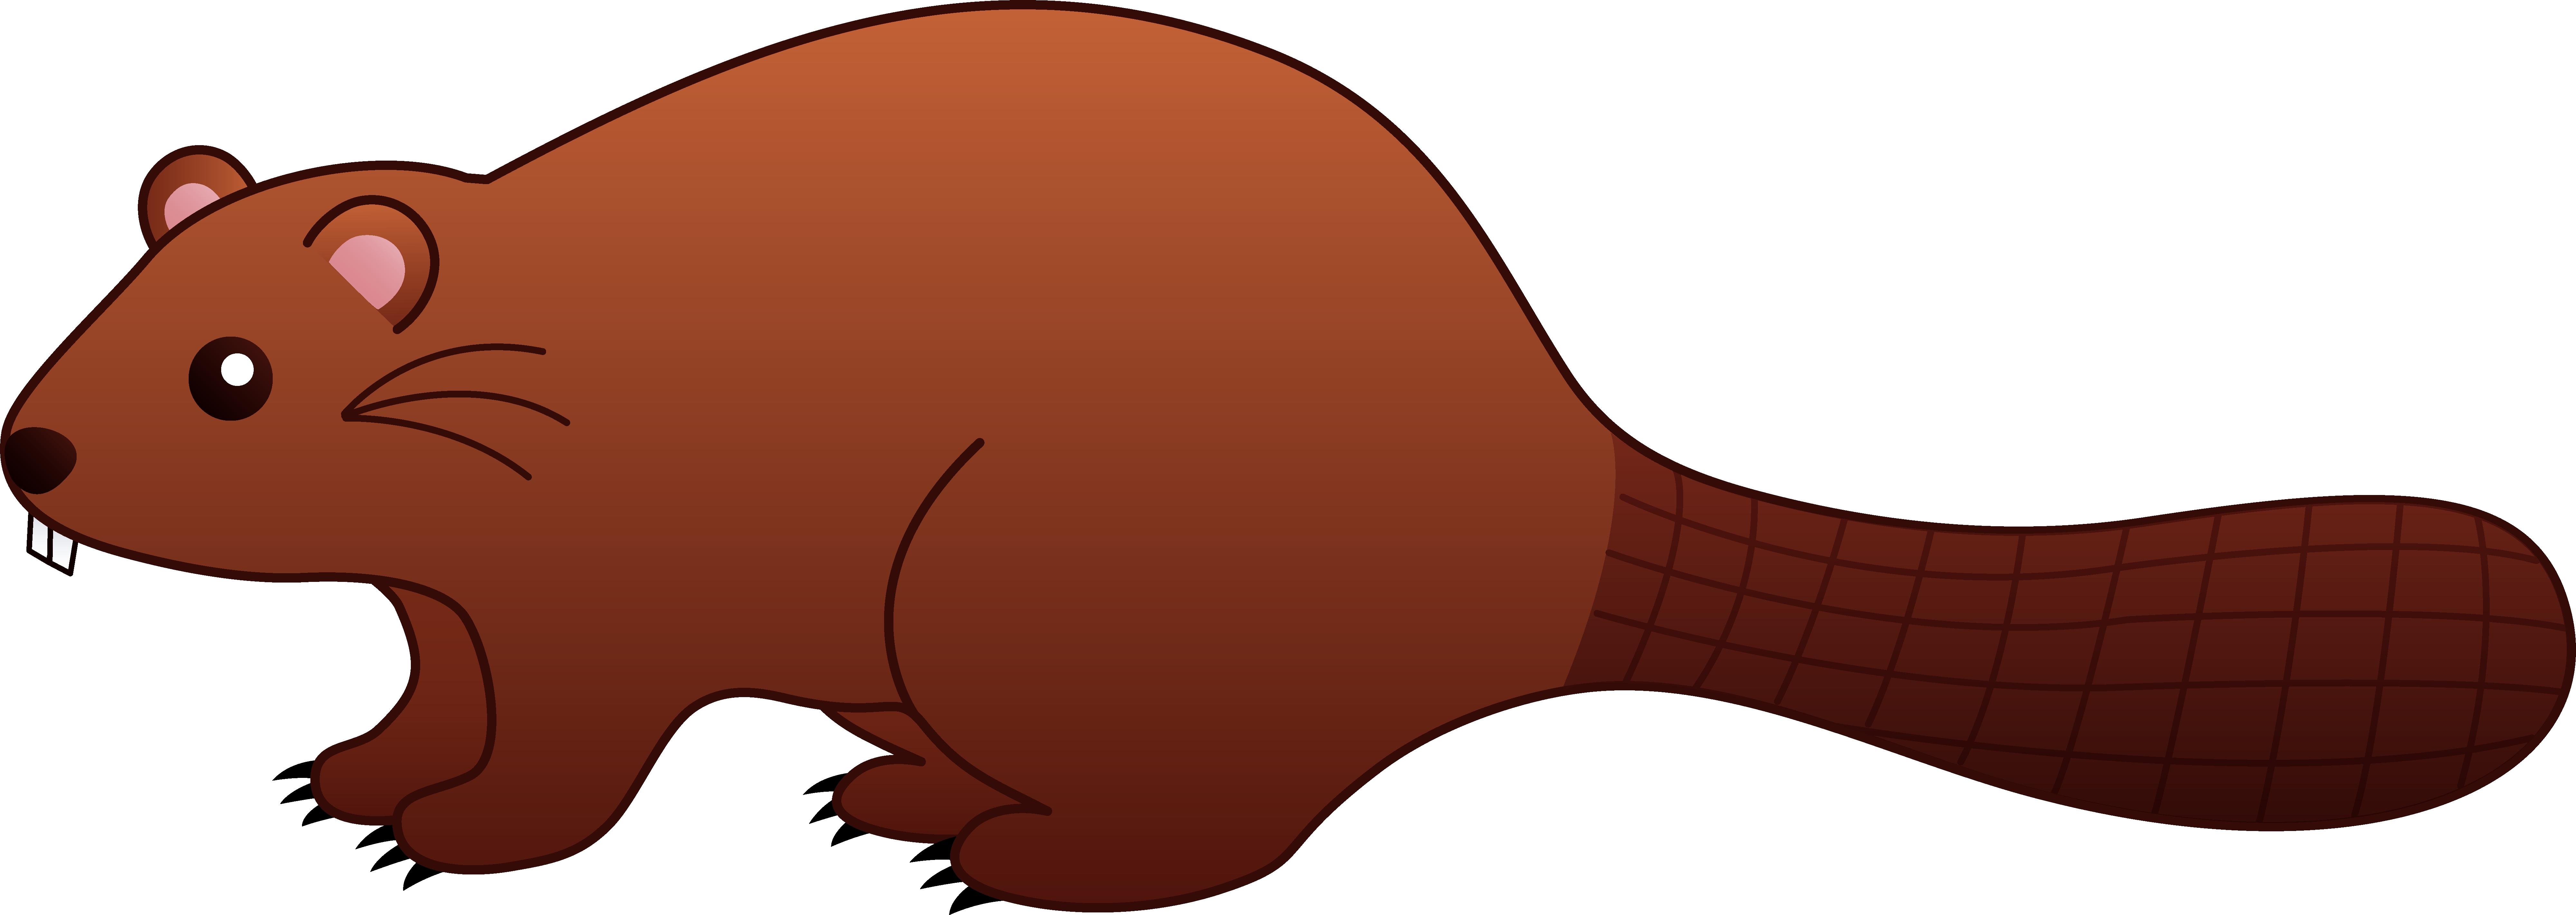 beaver clipart simple